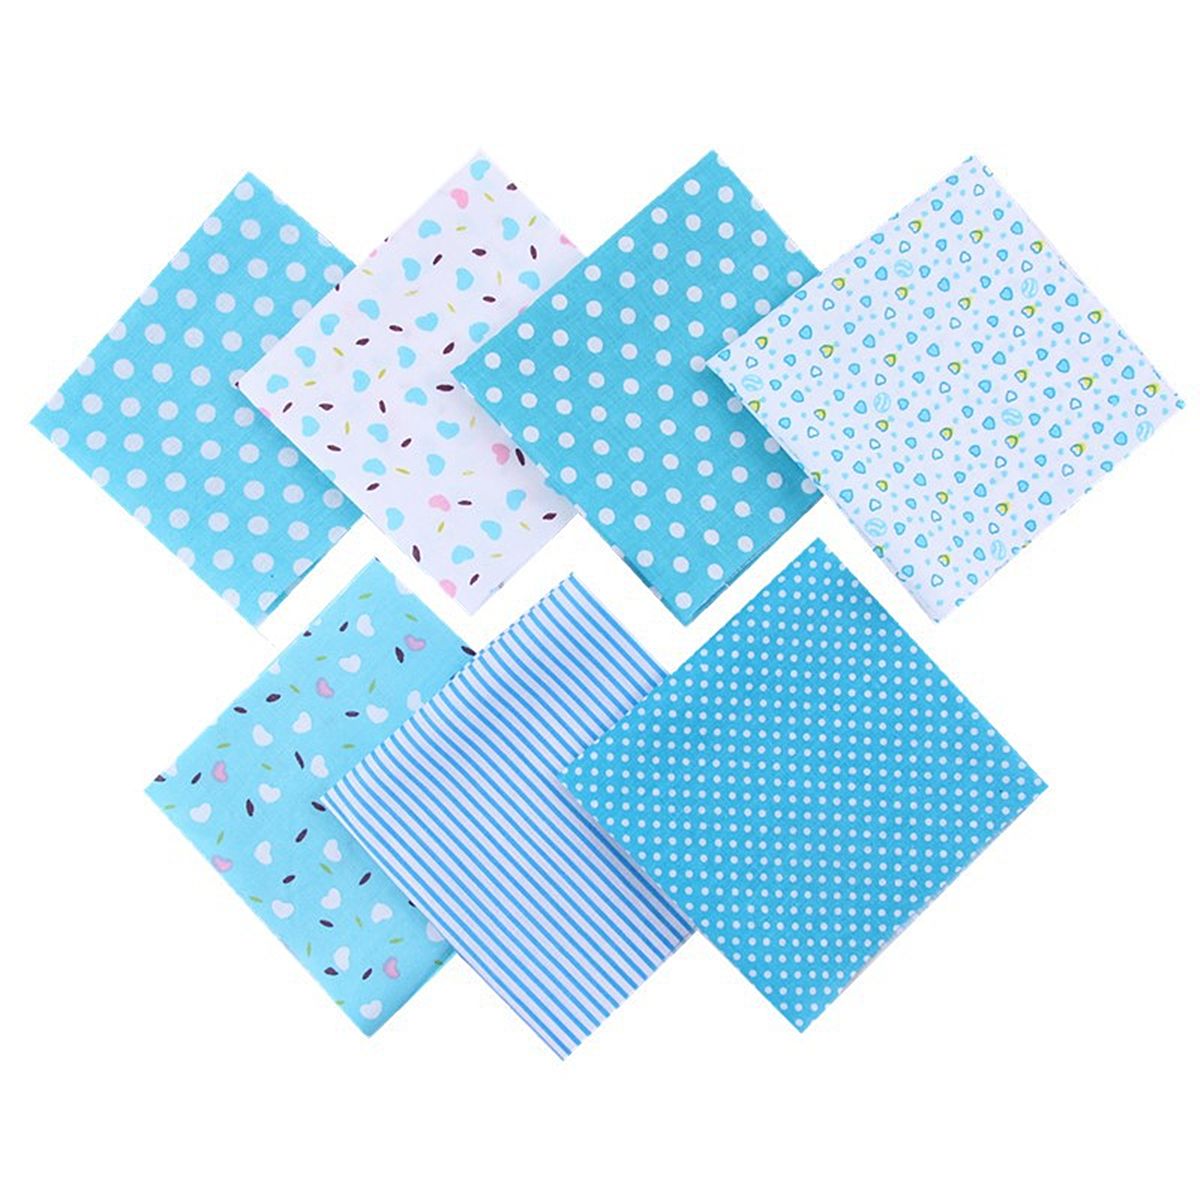 DIY-7PCS-Quilting-Bundle-Patchwork-Cotton-Fabric-Handmade-Sewing-Crafts-Floral-1691620